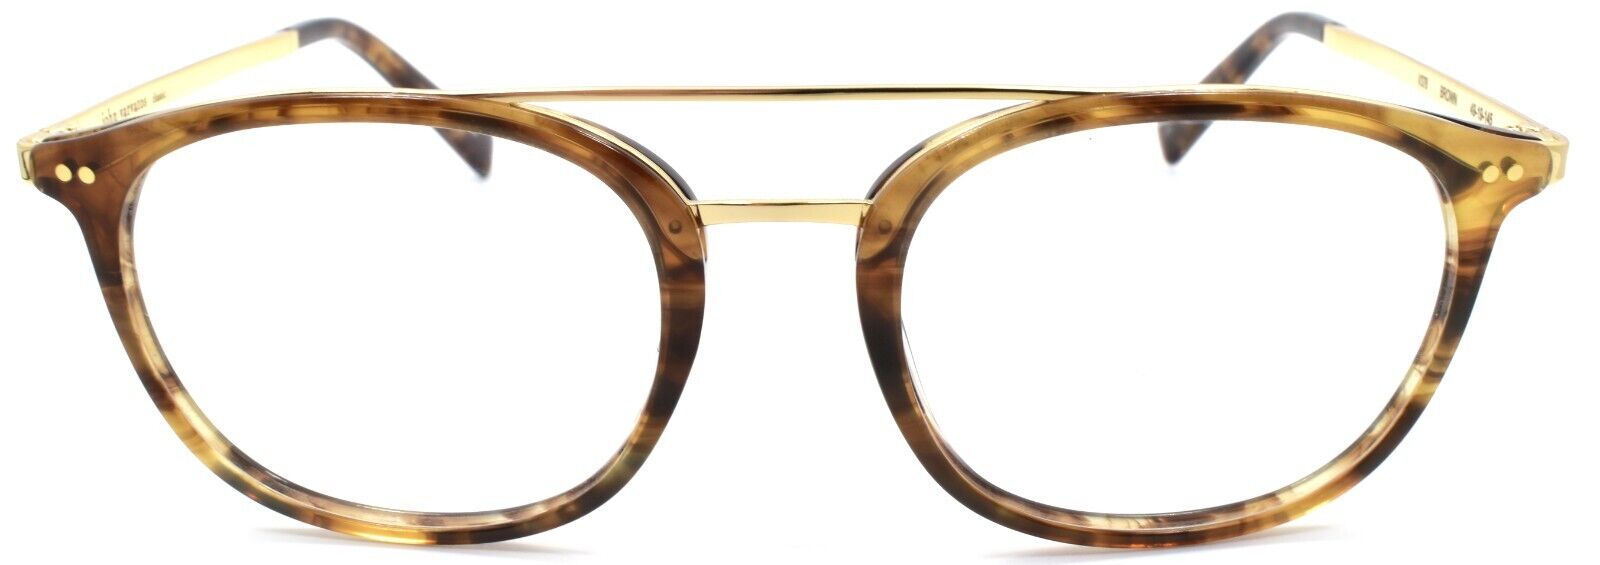 2-John Varvatos V378 Men's Eyeglasses Frames Aviator 49-19-145 Brown / Gold Japan-751286324112-IKSpecs